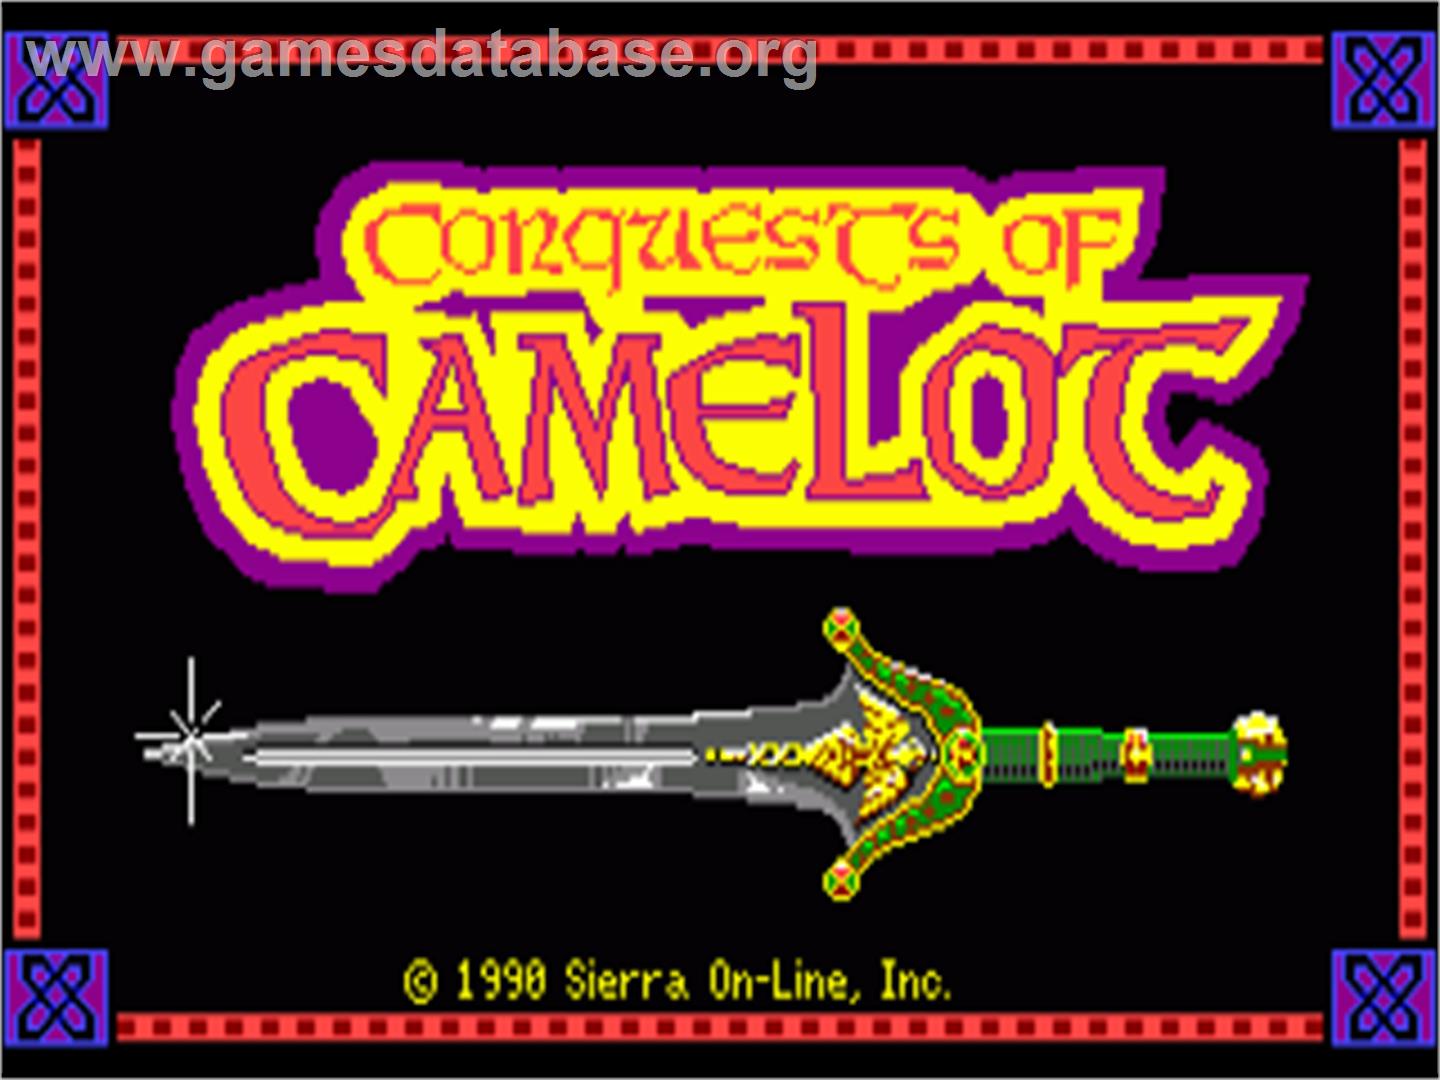 Conquests of Camelot: The Search for the Grail - Commodore Amiga - Artwork - Title Screen